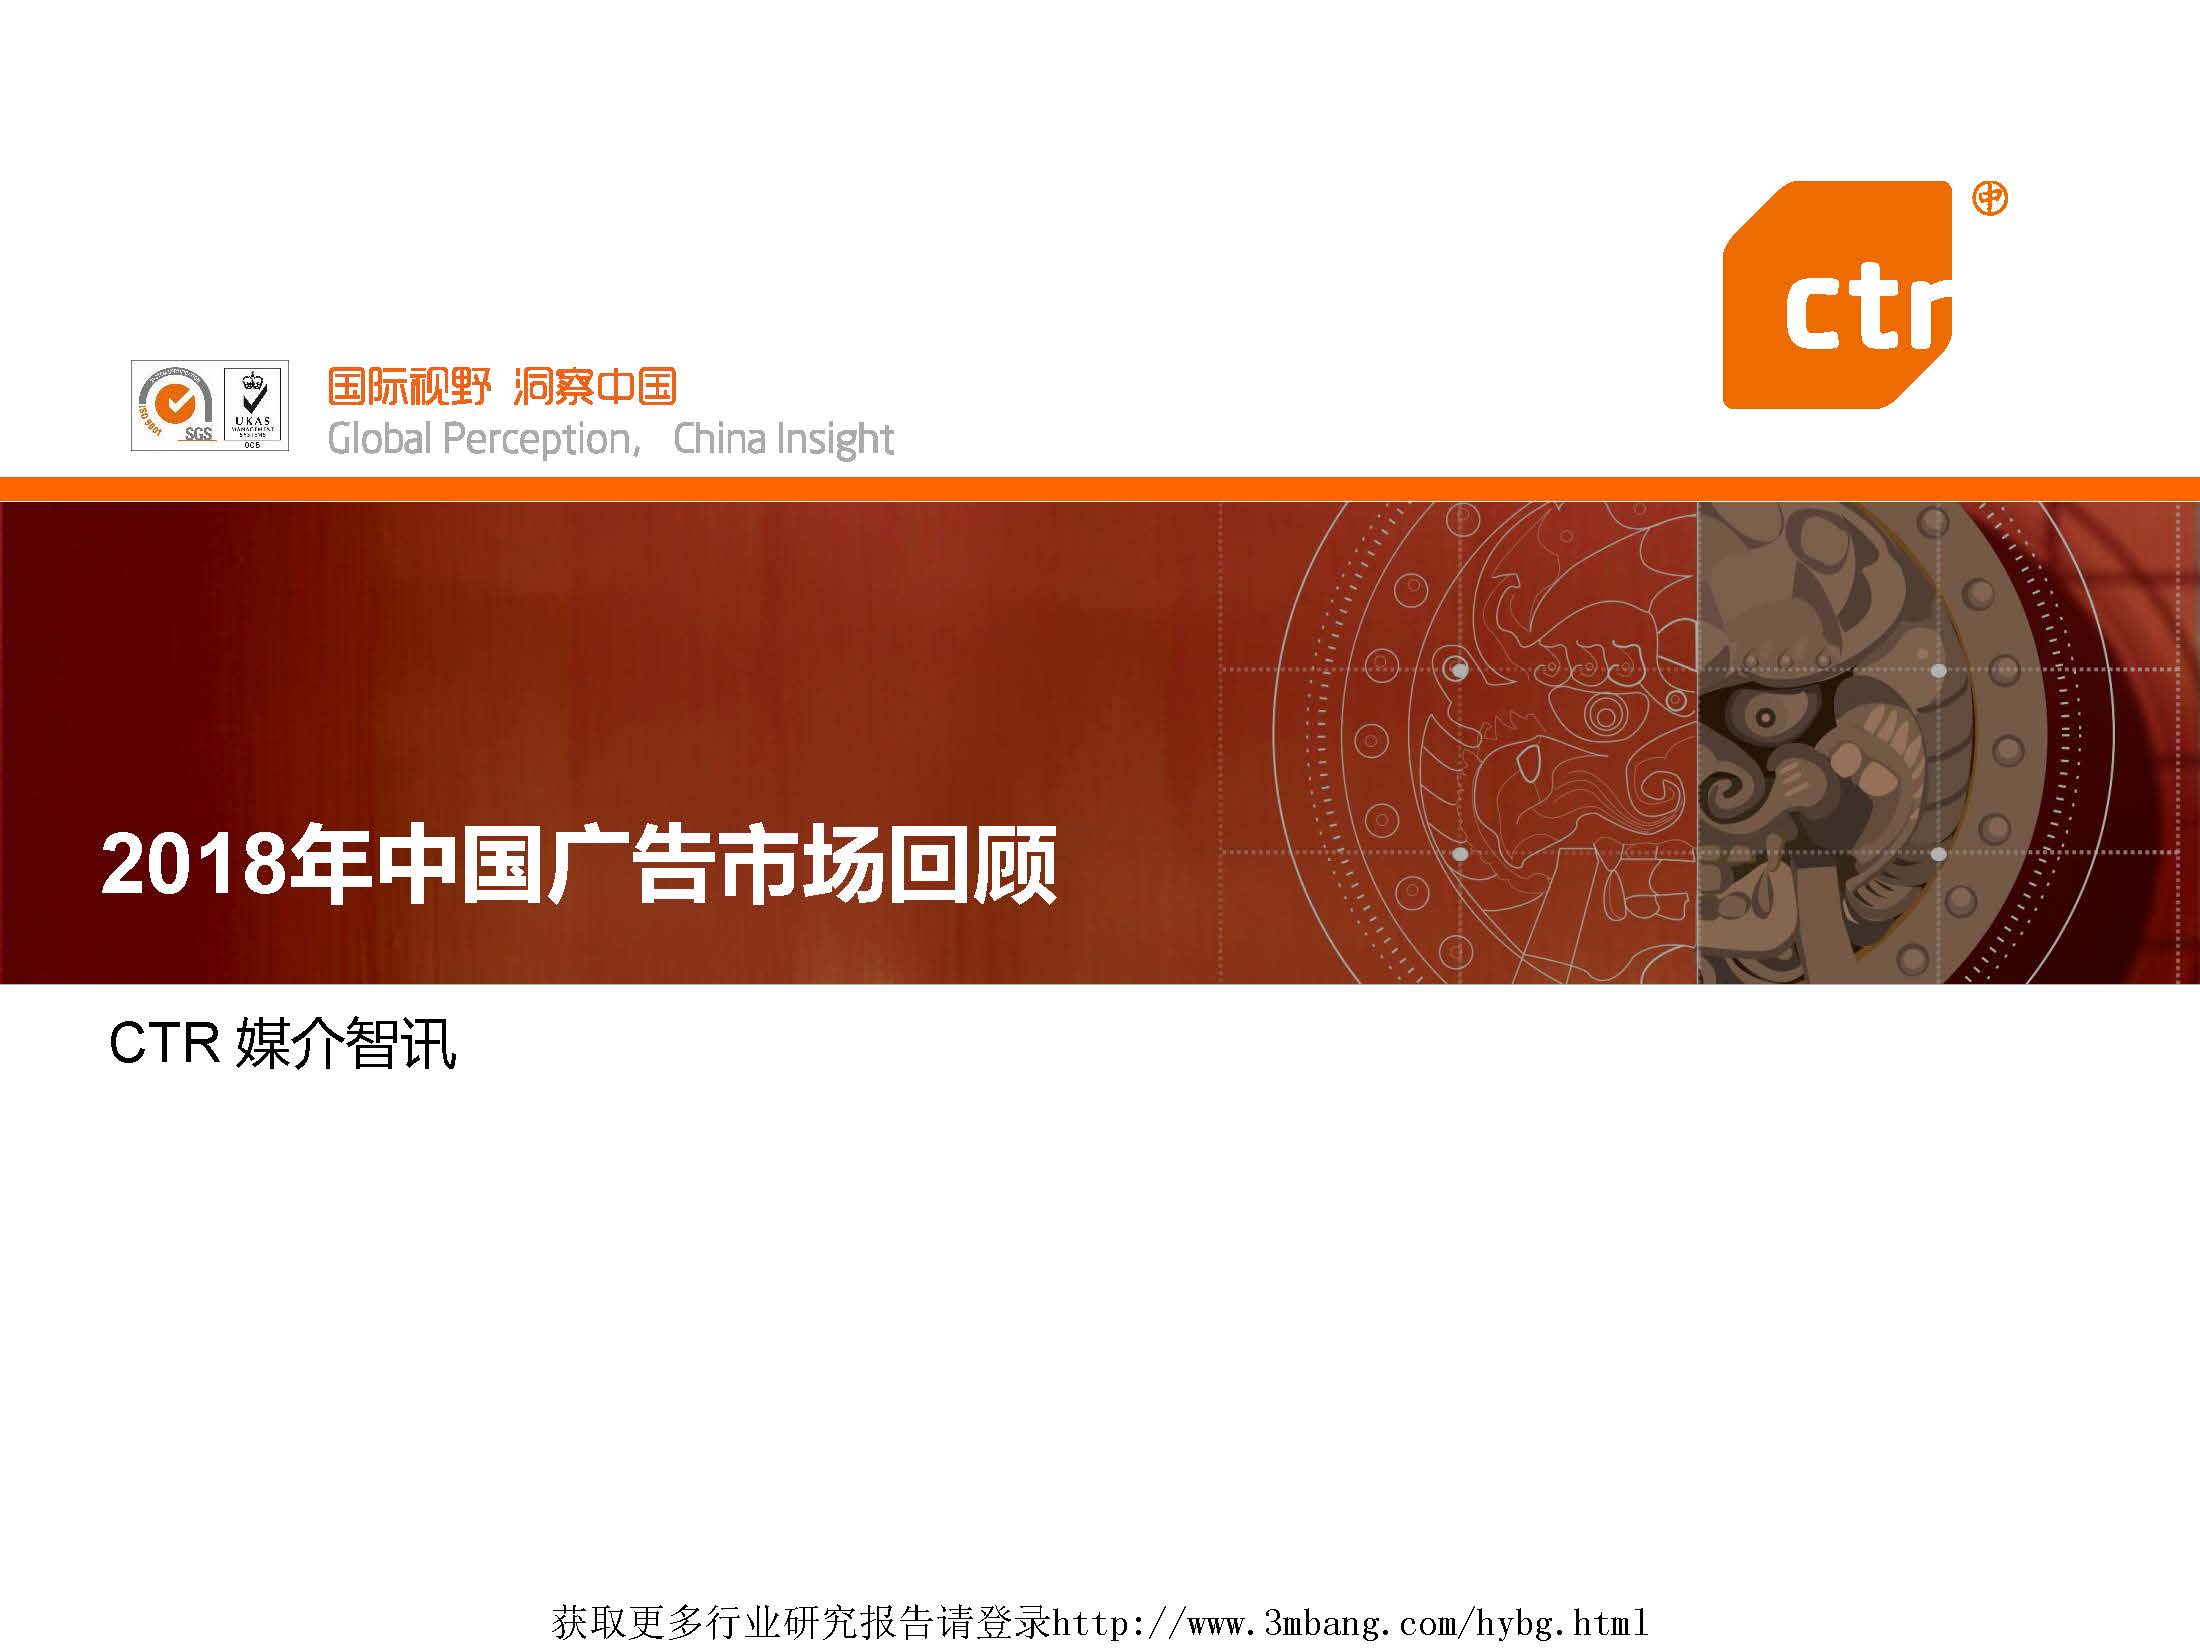 CTR：2018年中国广告市场回顾报告(附下载地址)